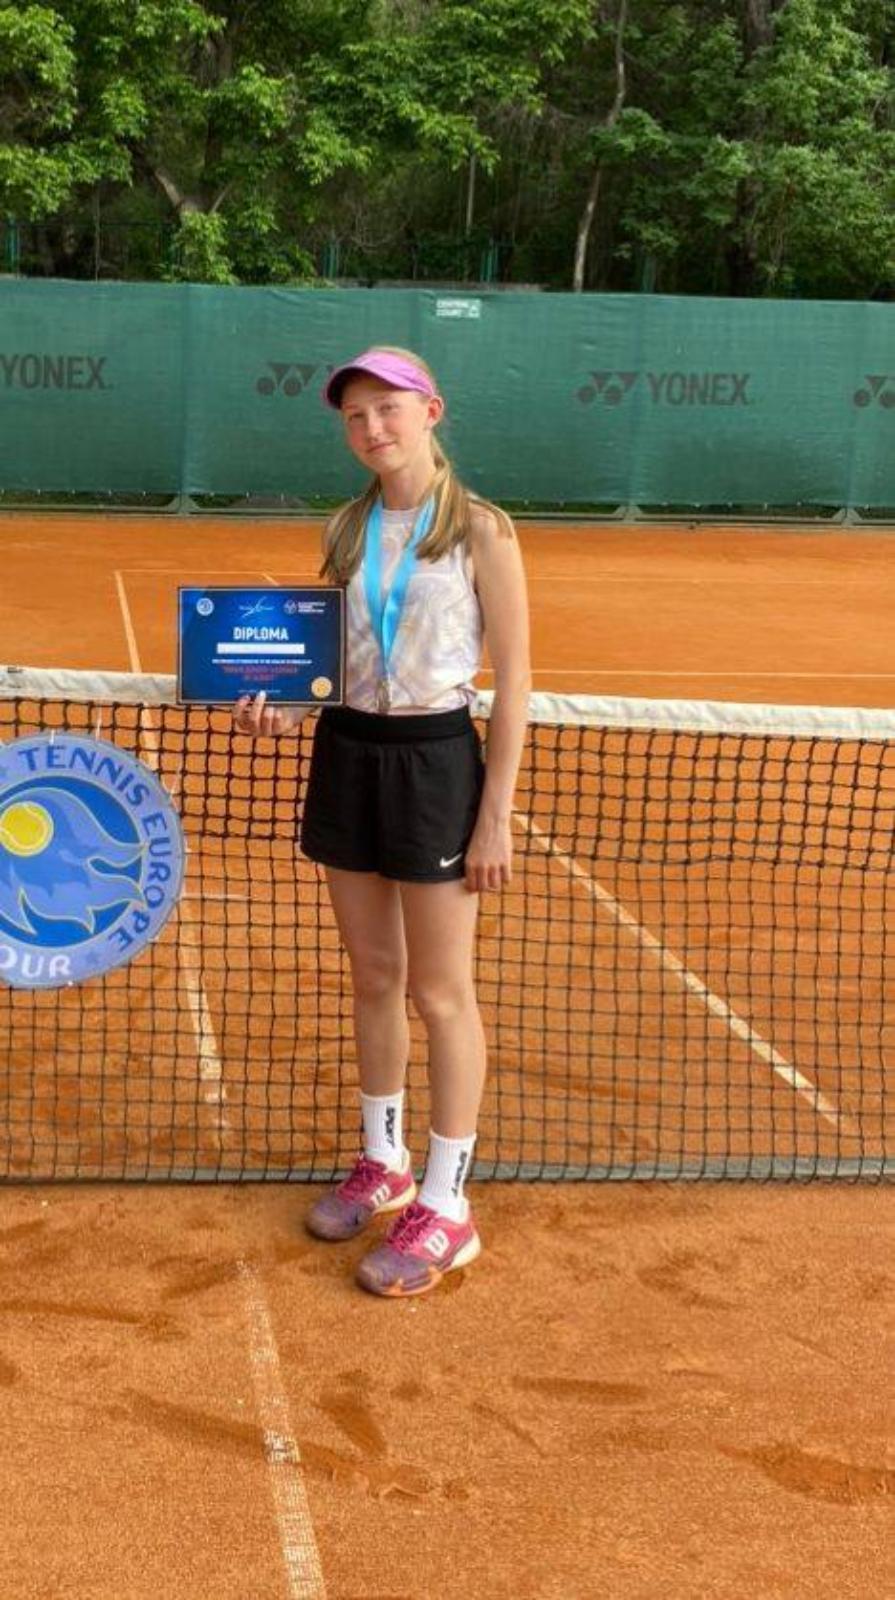 Аделя Борисова - финалистка Tennis Europe 14&under Almaty G3